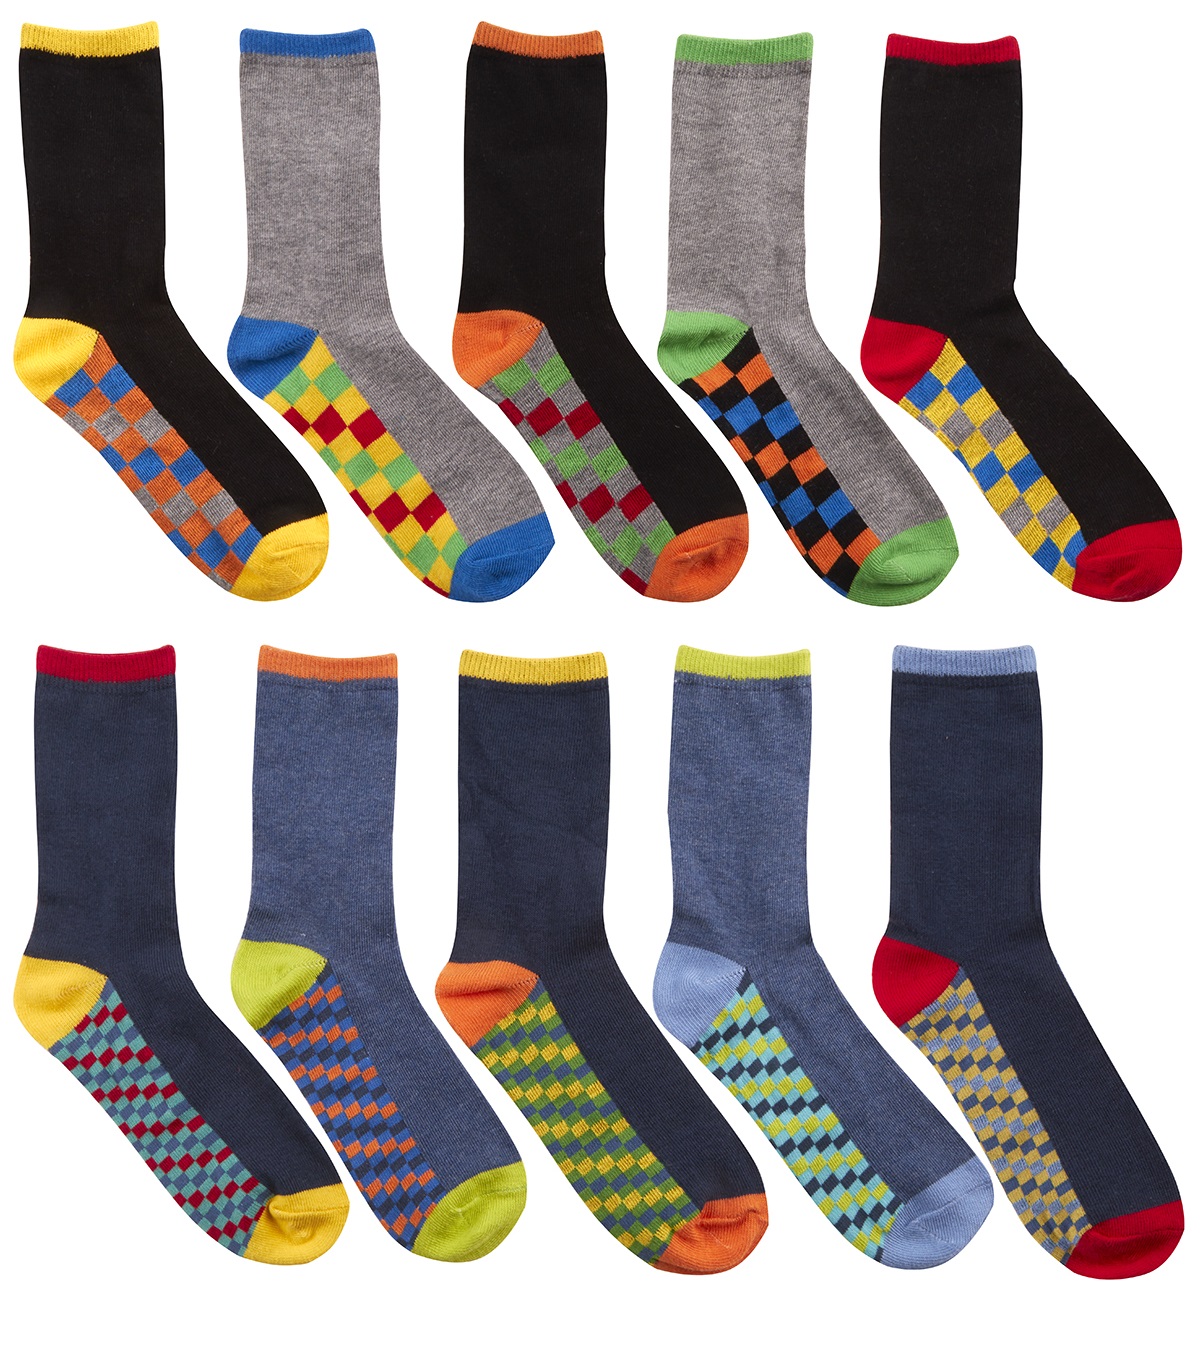 WKDS 5 pairs Boys Black Socks Coloured Heel /& Toes Multi Colour Design Cotton Blend Socks